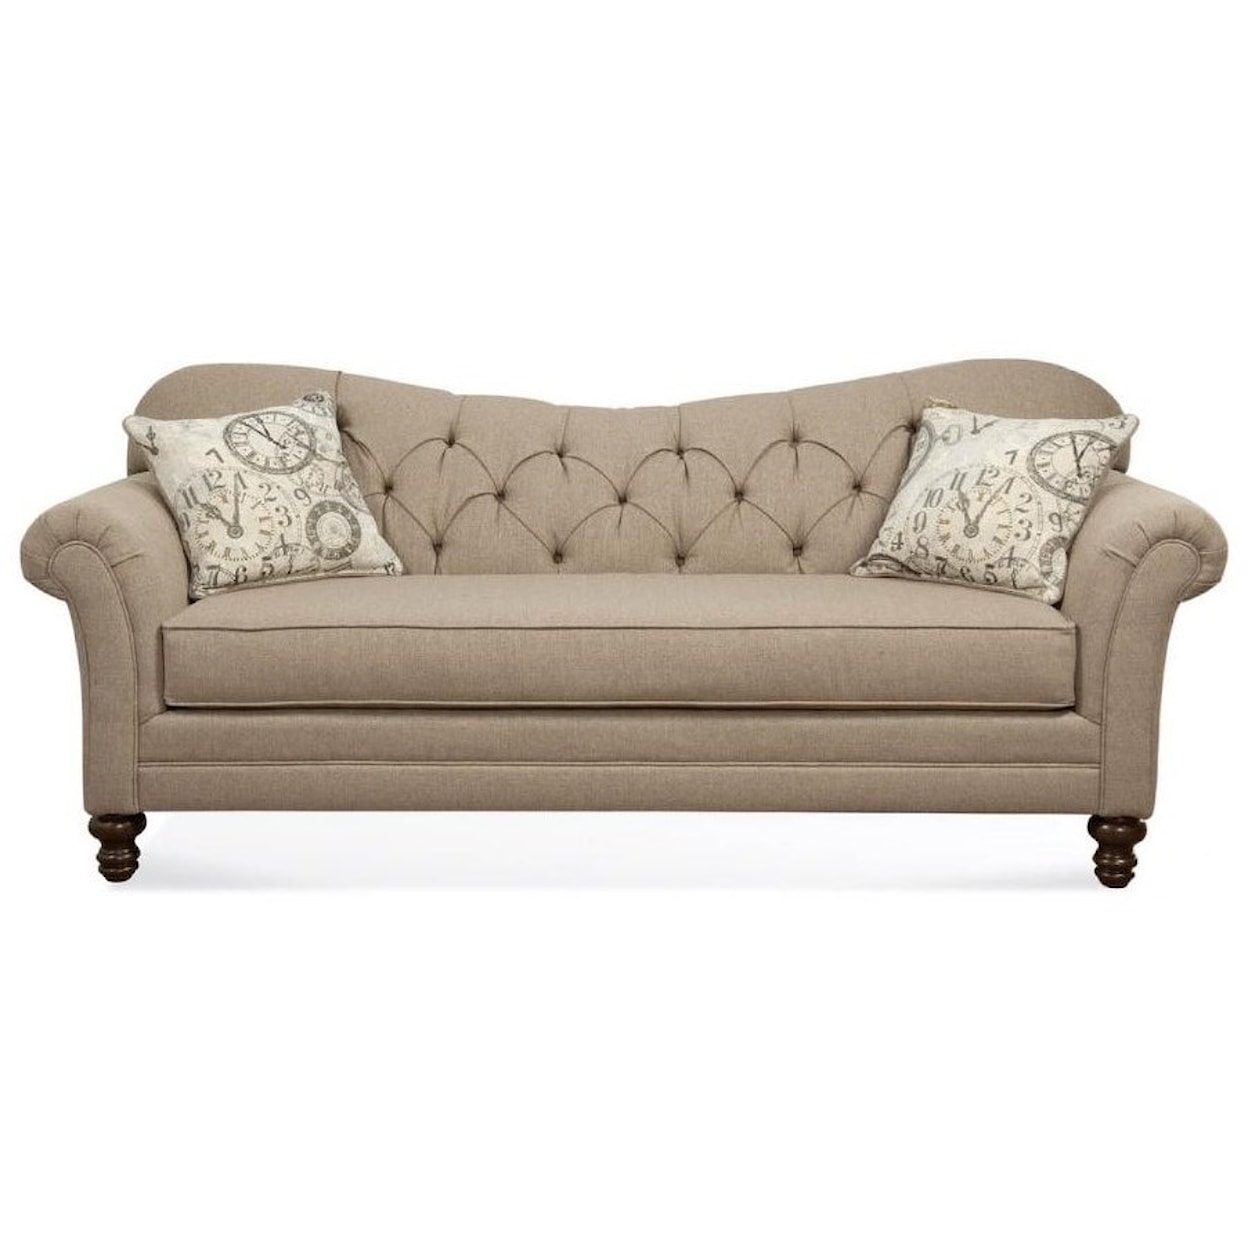 Serta Upholstery by Hughes Furniture 8750 Sofa